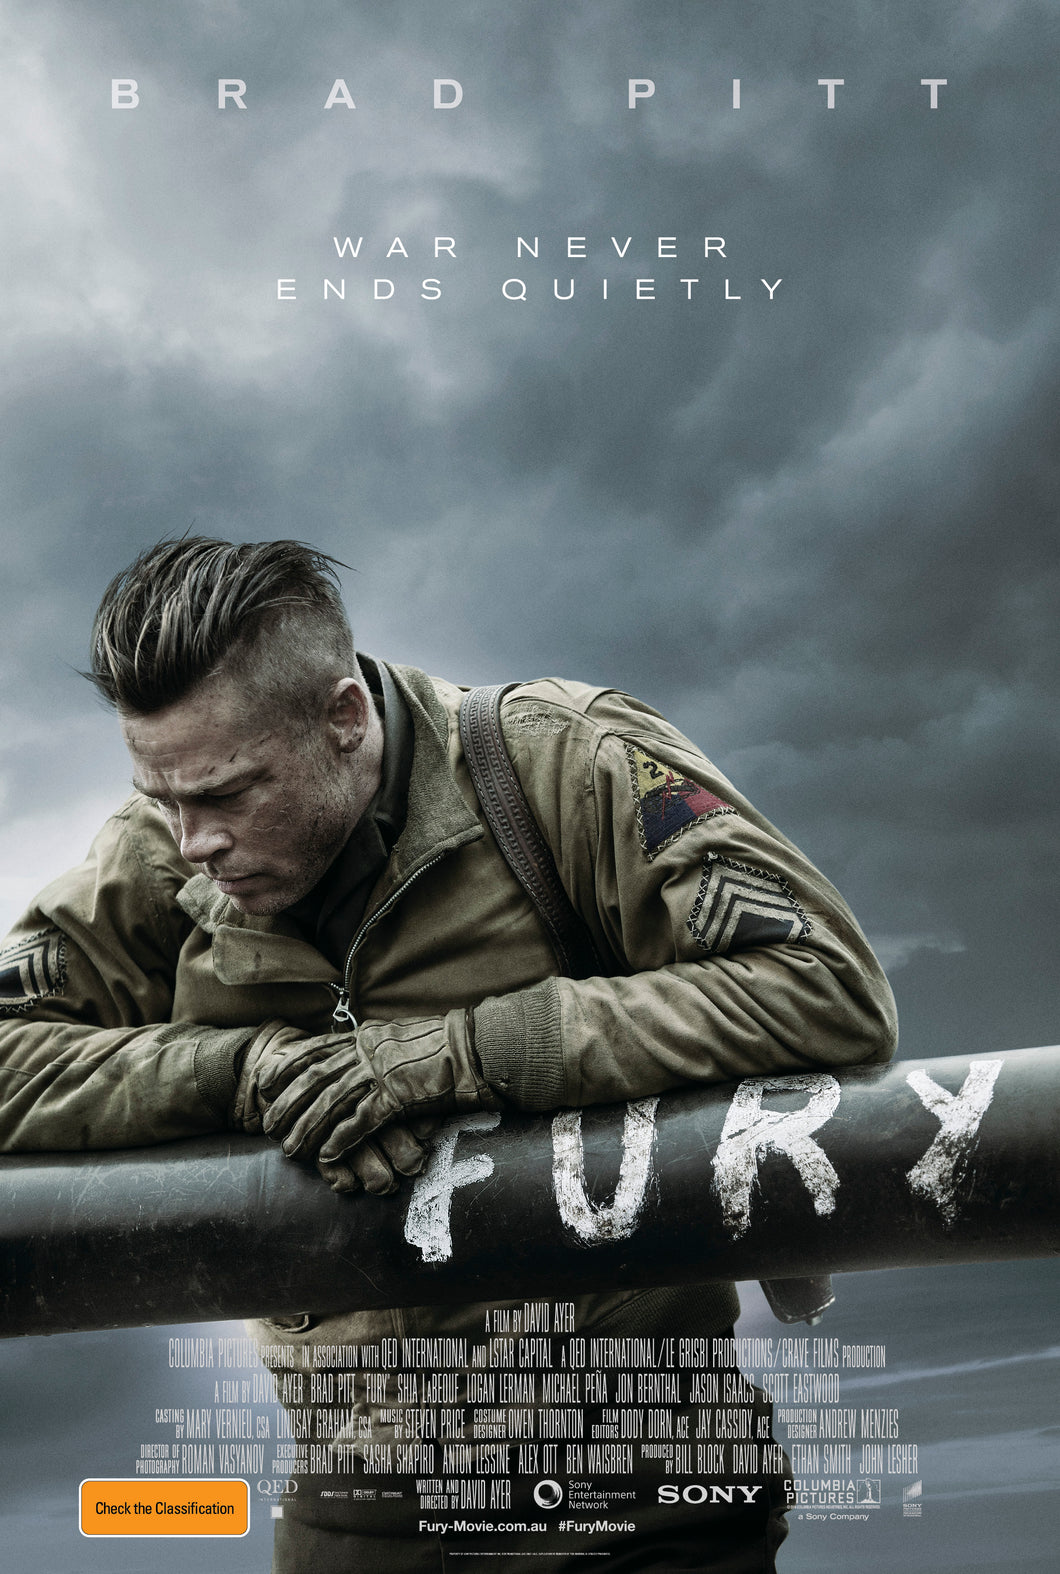 Poster Película Fury